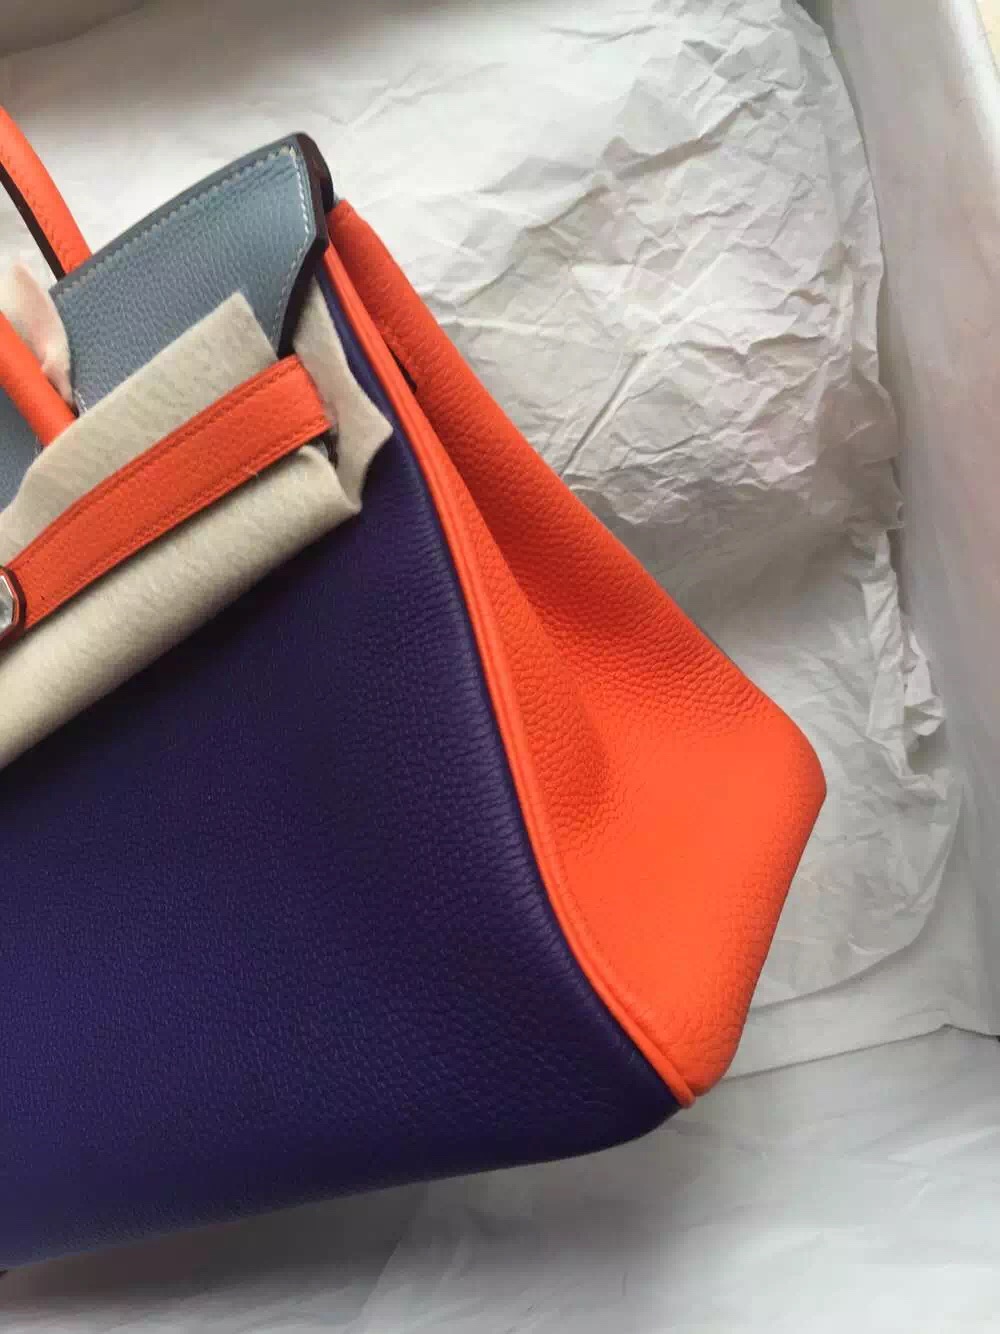 9K Iris Purple/J7 Blue Lin/Orange Togo Leather Hermes Birkin Bag 30cm